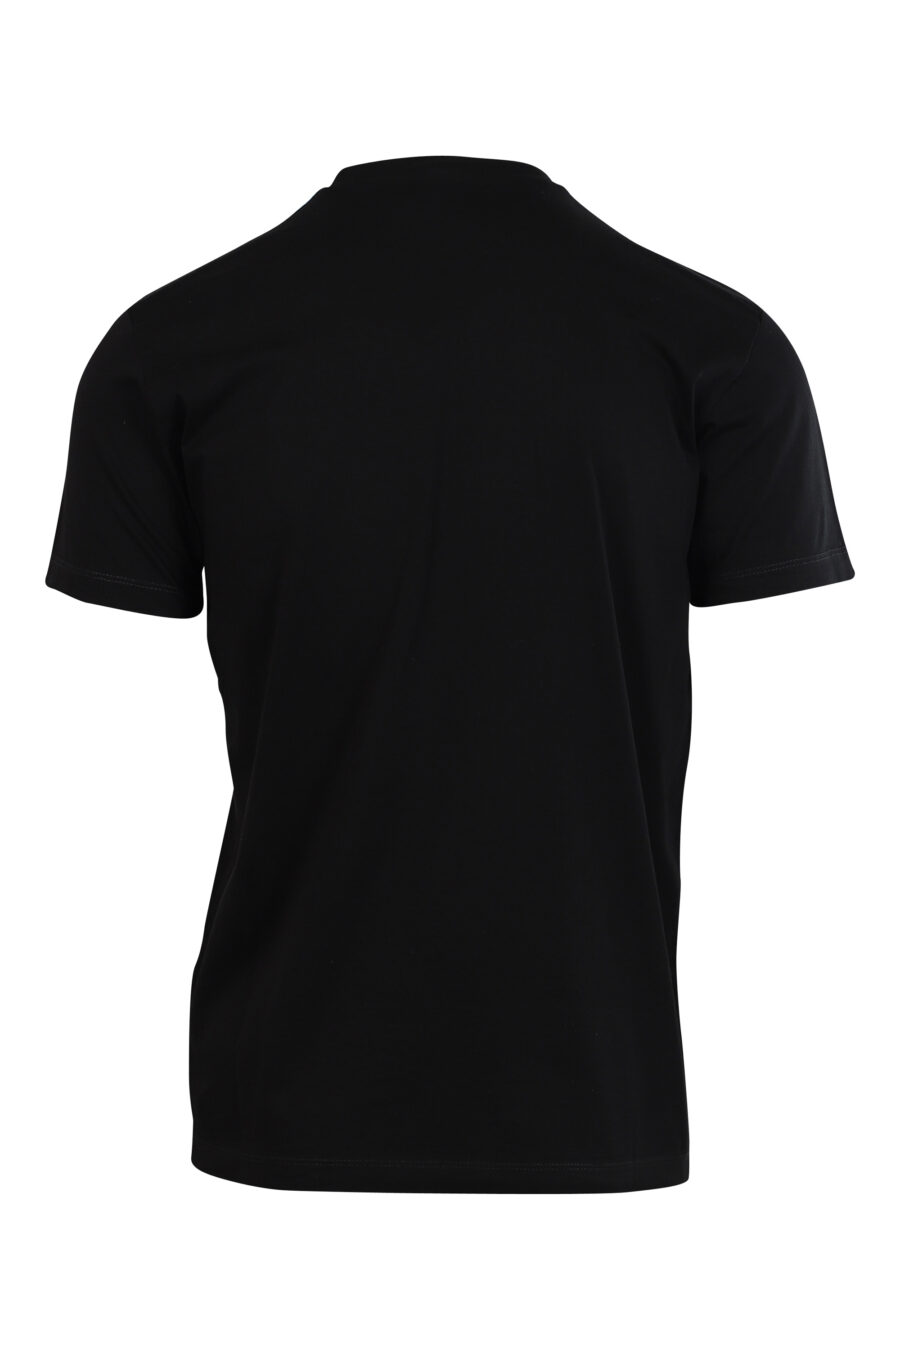 Schwarzes T-Shirt mit weißem "Uni"-Maxilogo - 8052134945810 2